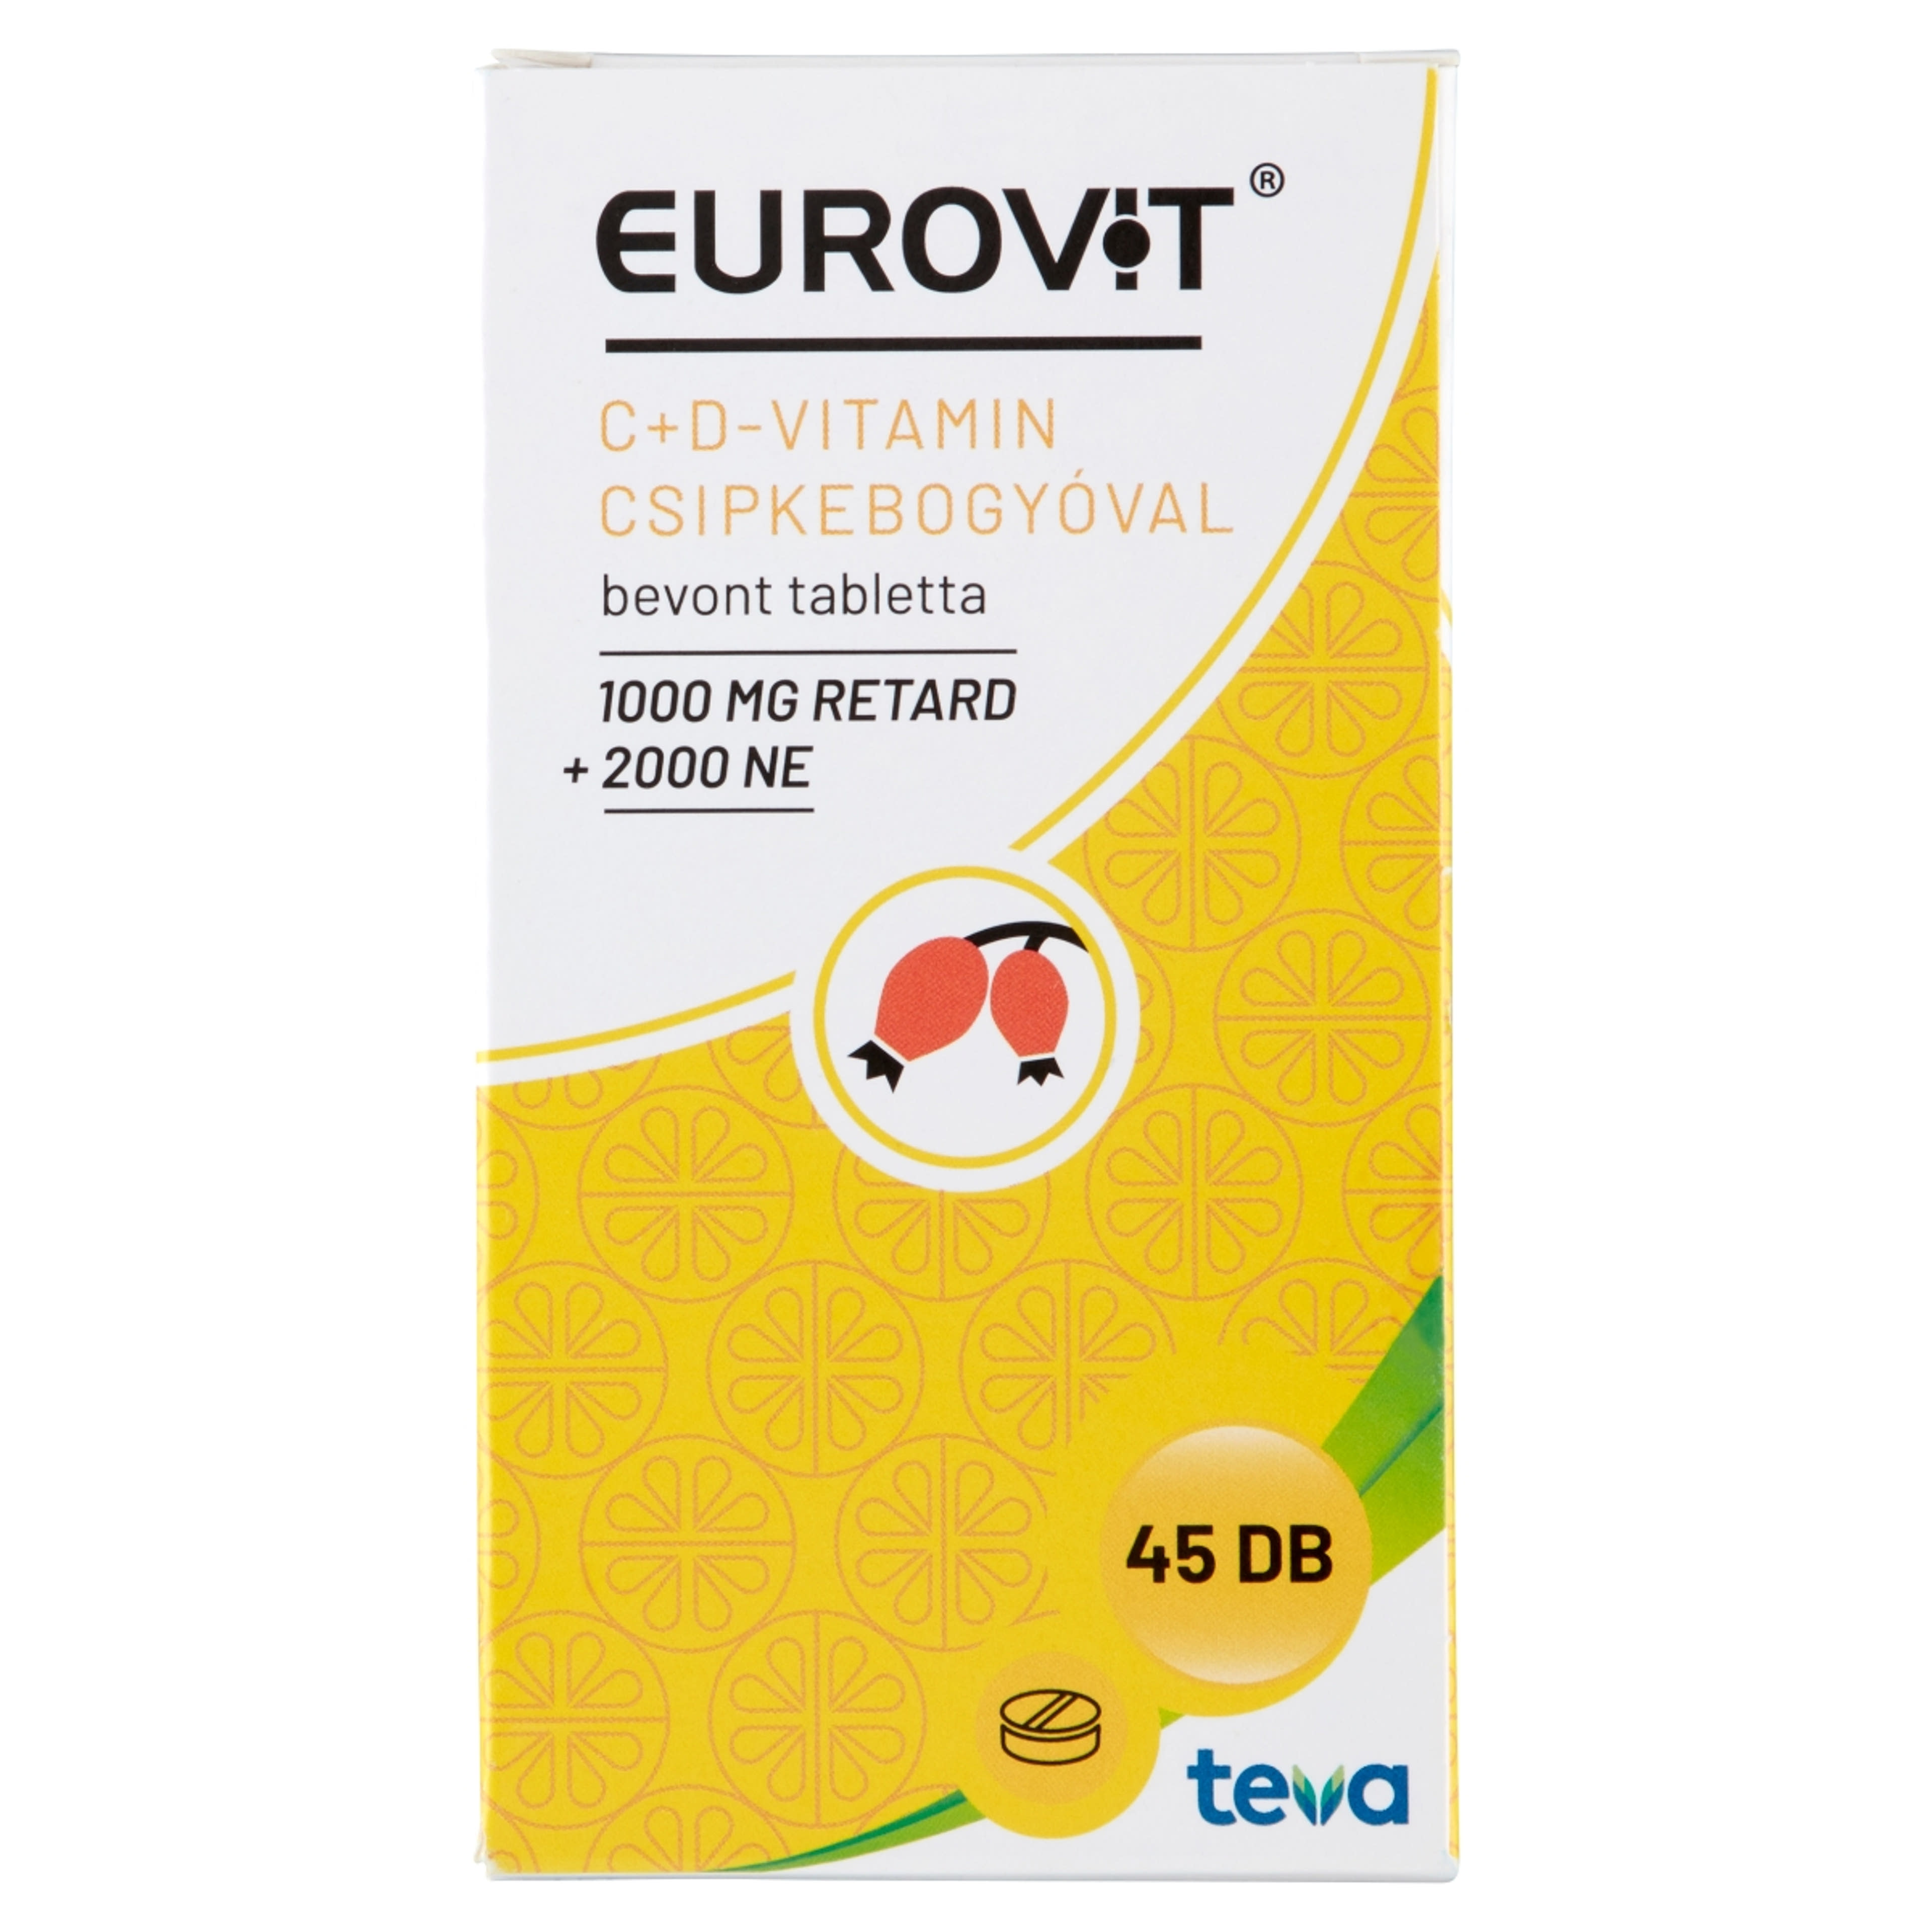 Eurovit C+D vitamin bevont tabletta csipkebogyóval - 45 db-1